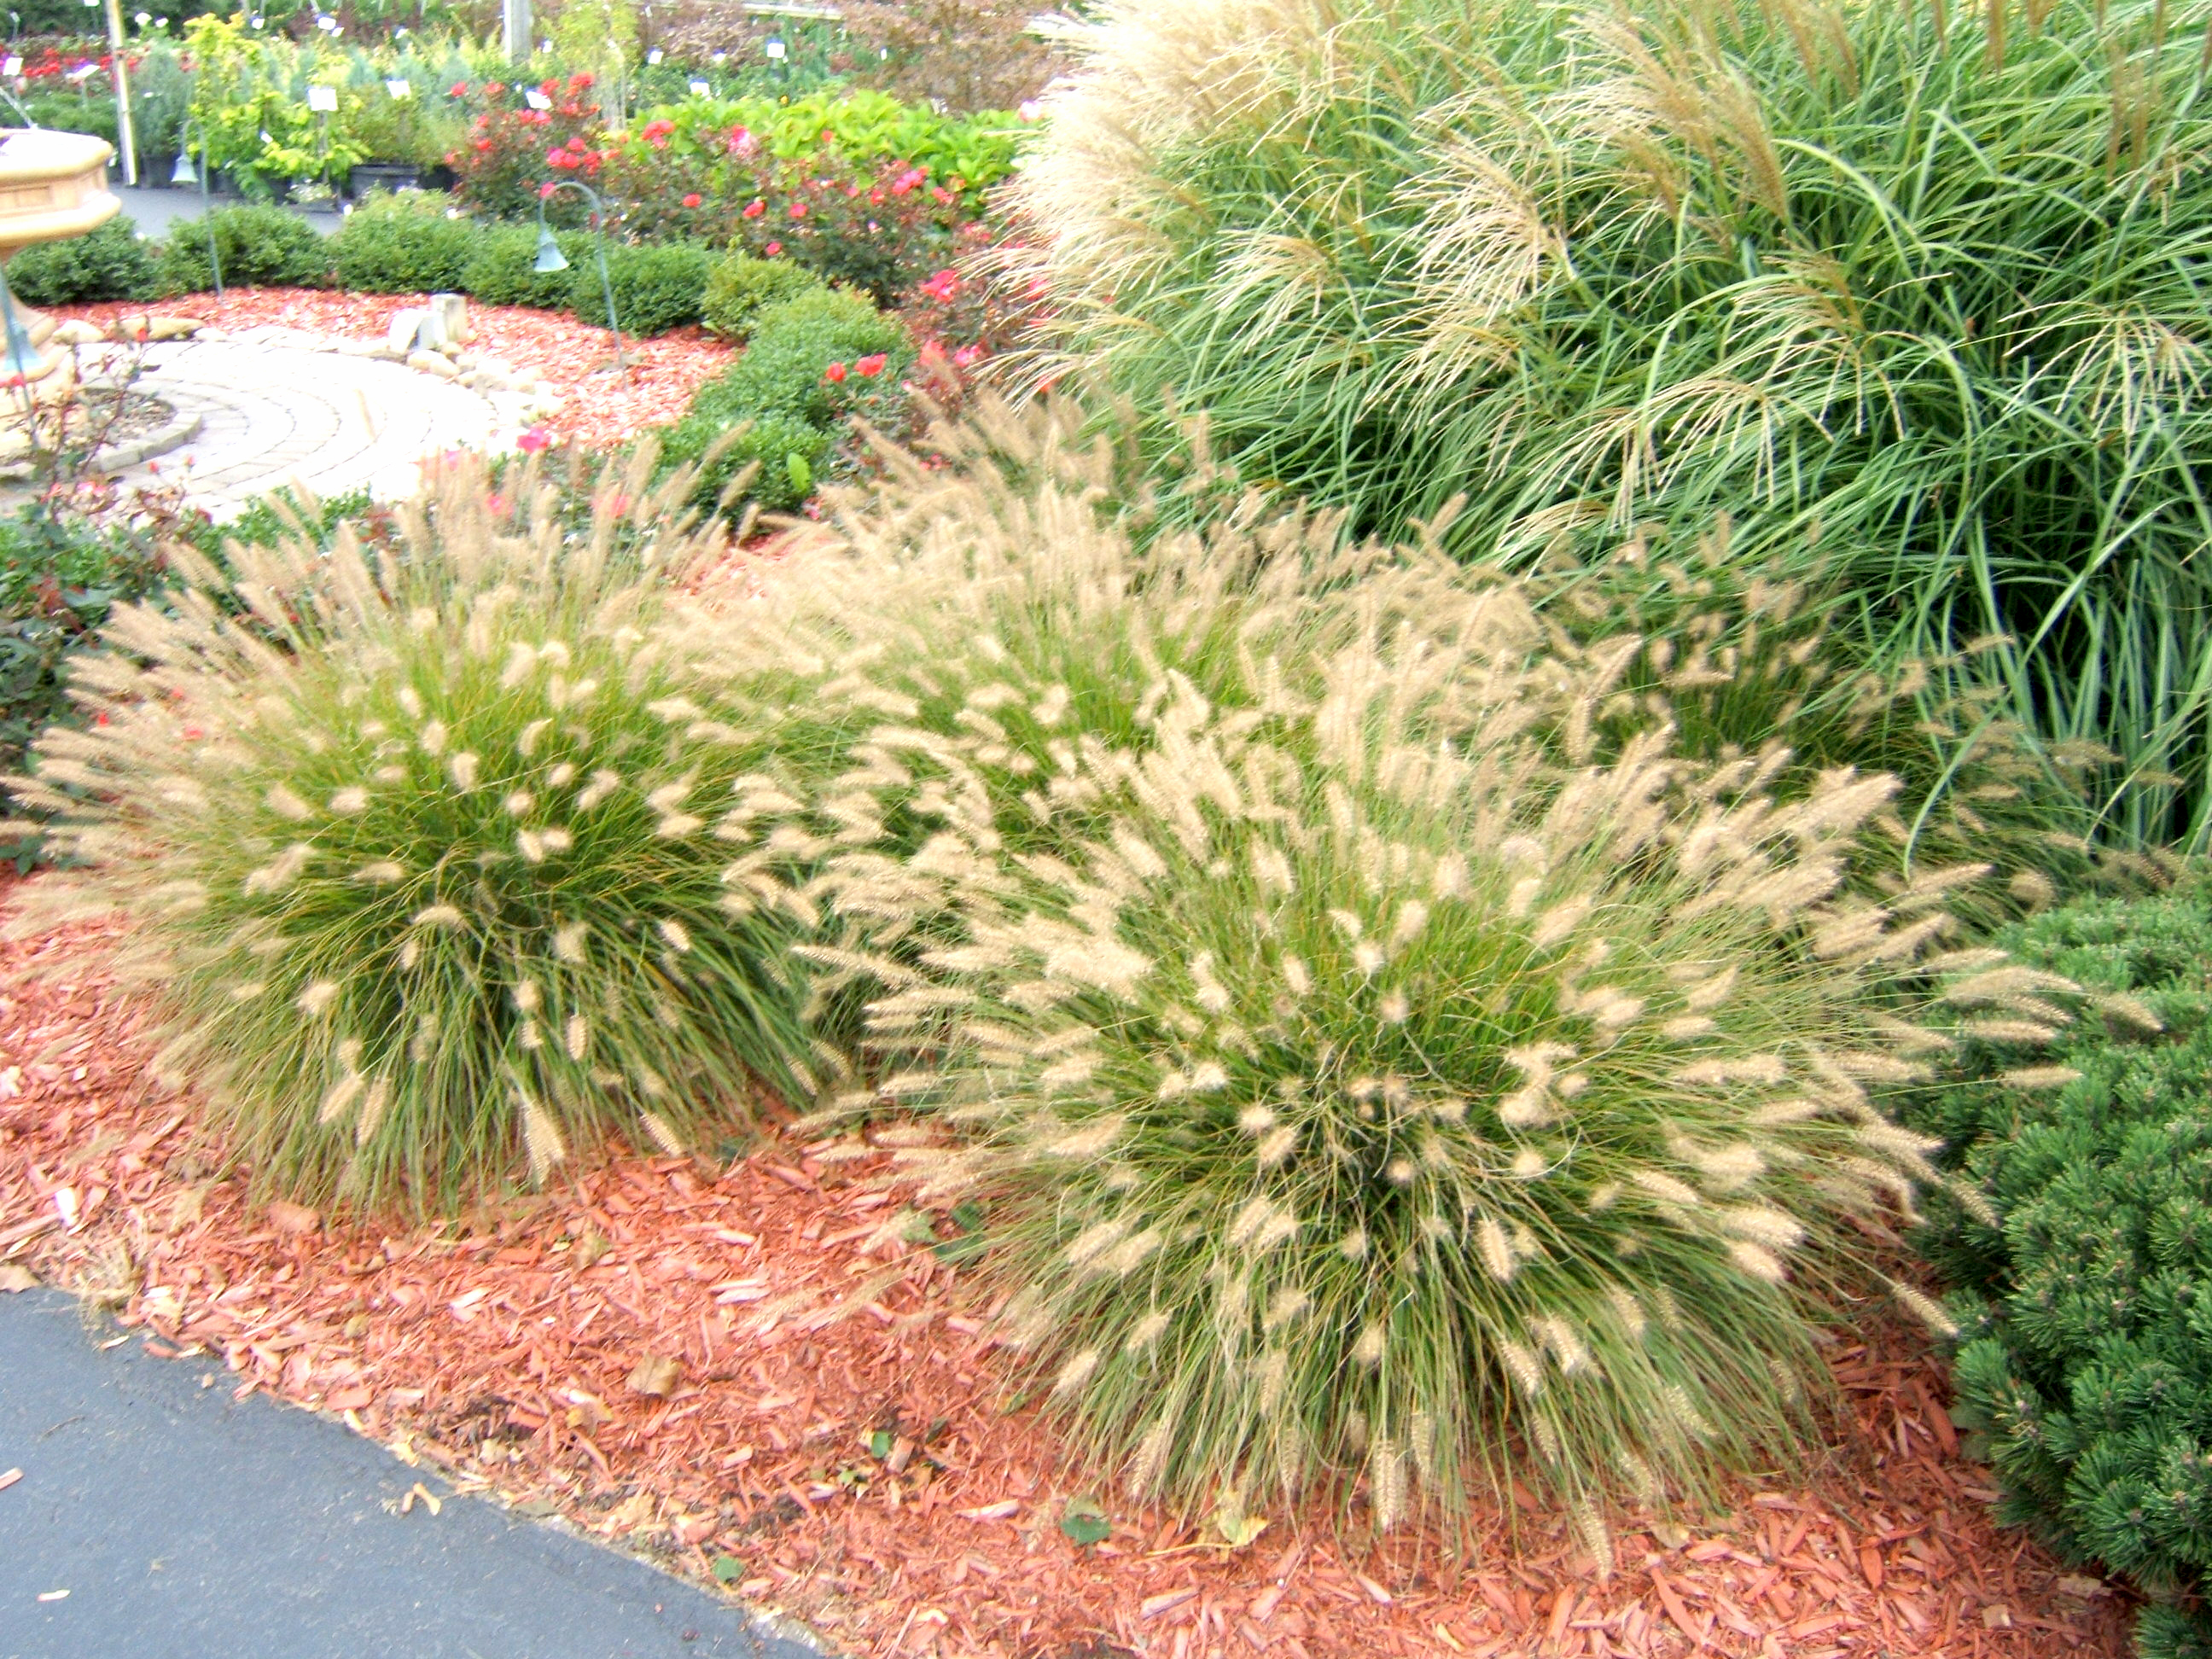 Get It Growing: Ornamental grass adds beauty with minimum effort ...